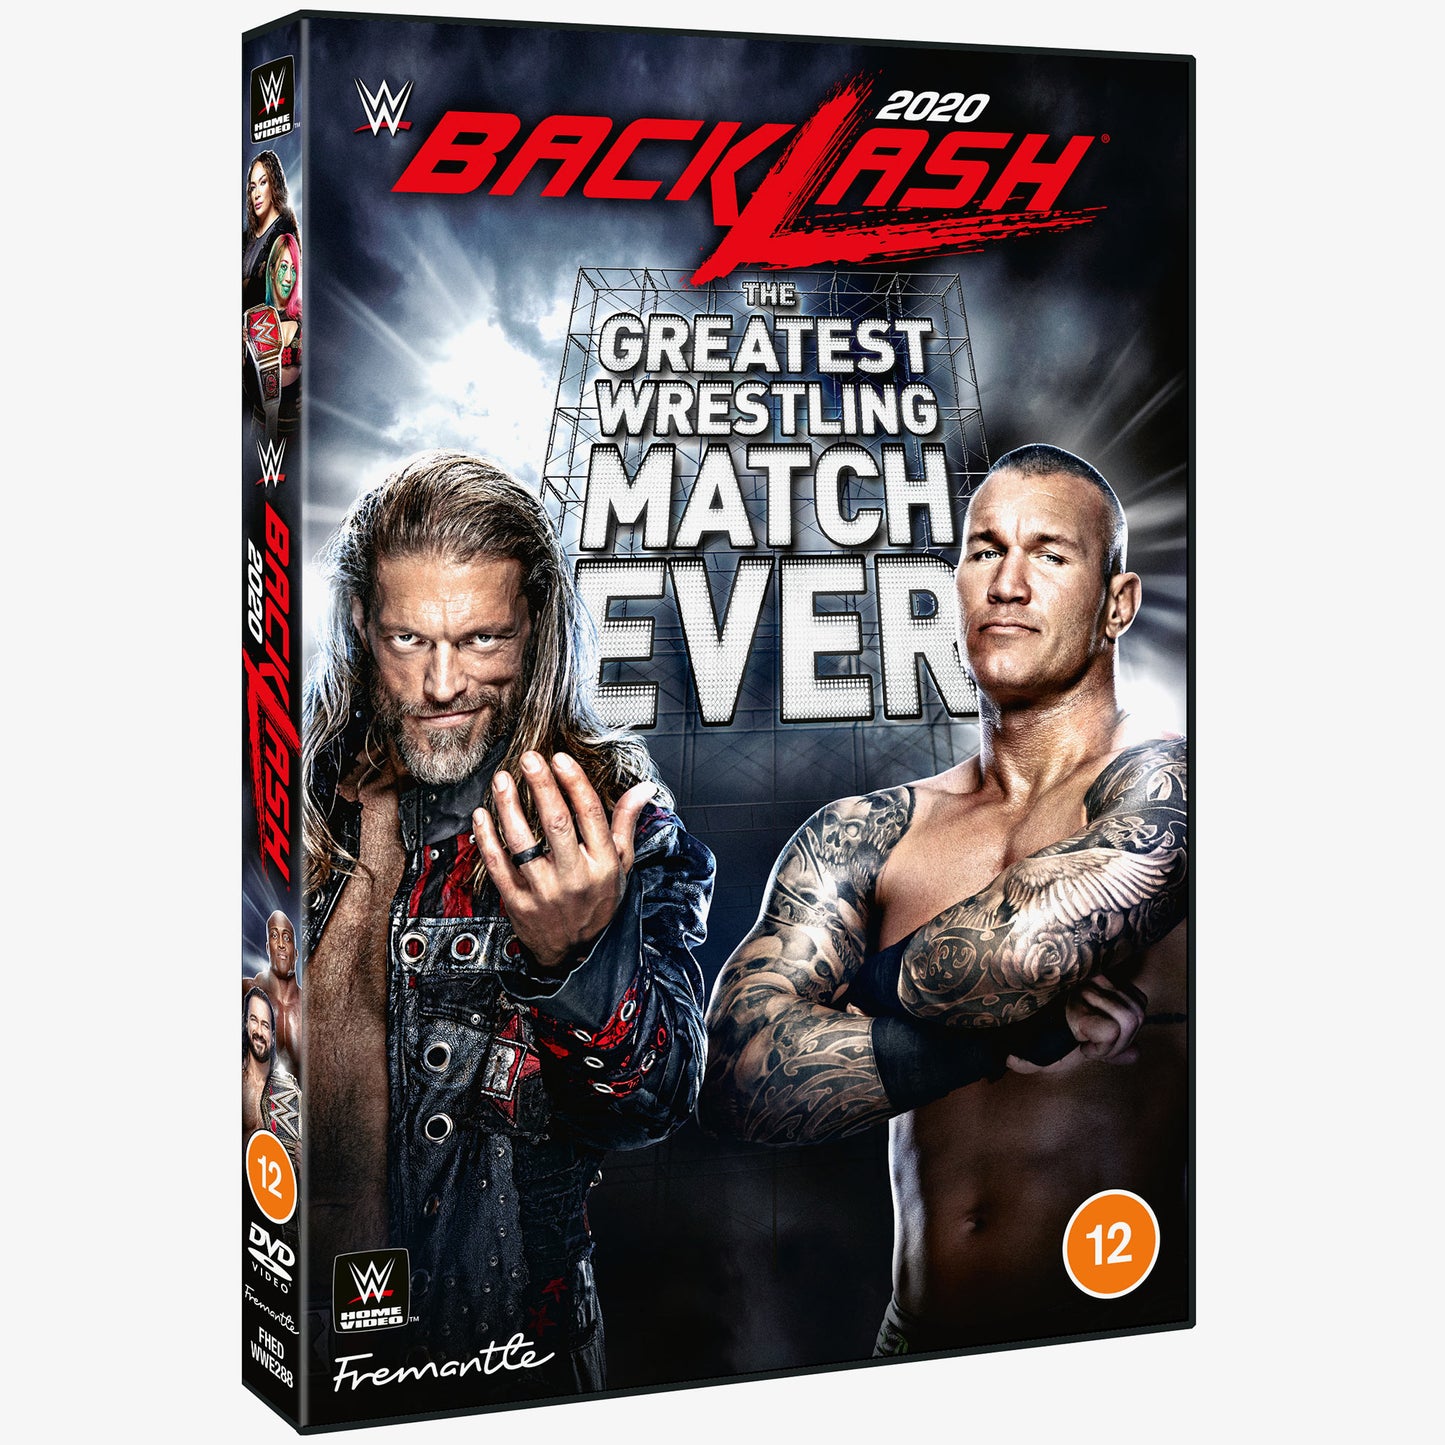 WWE Backlash 2020 DVD